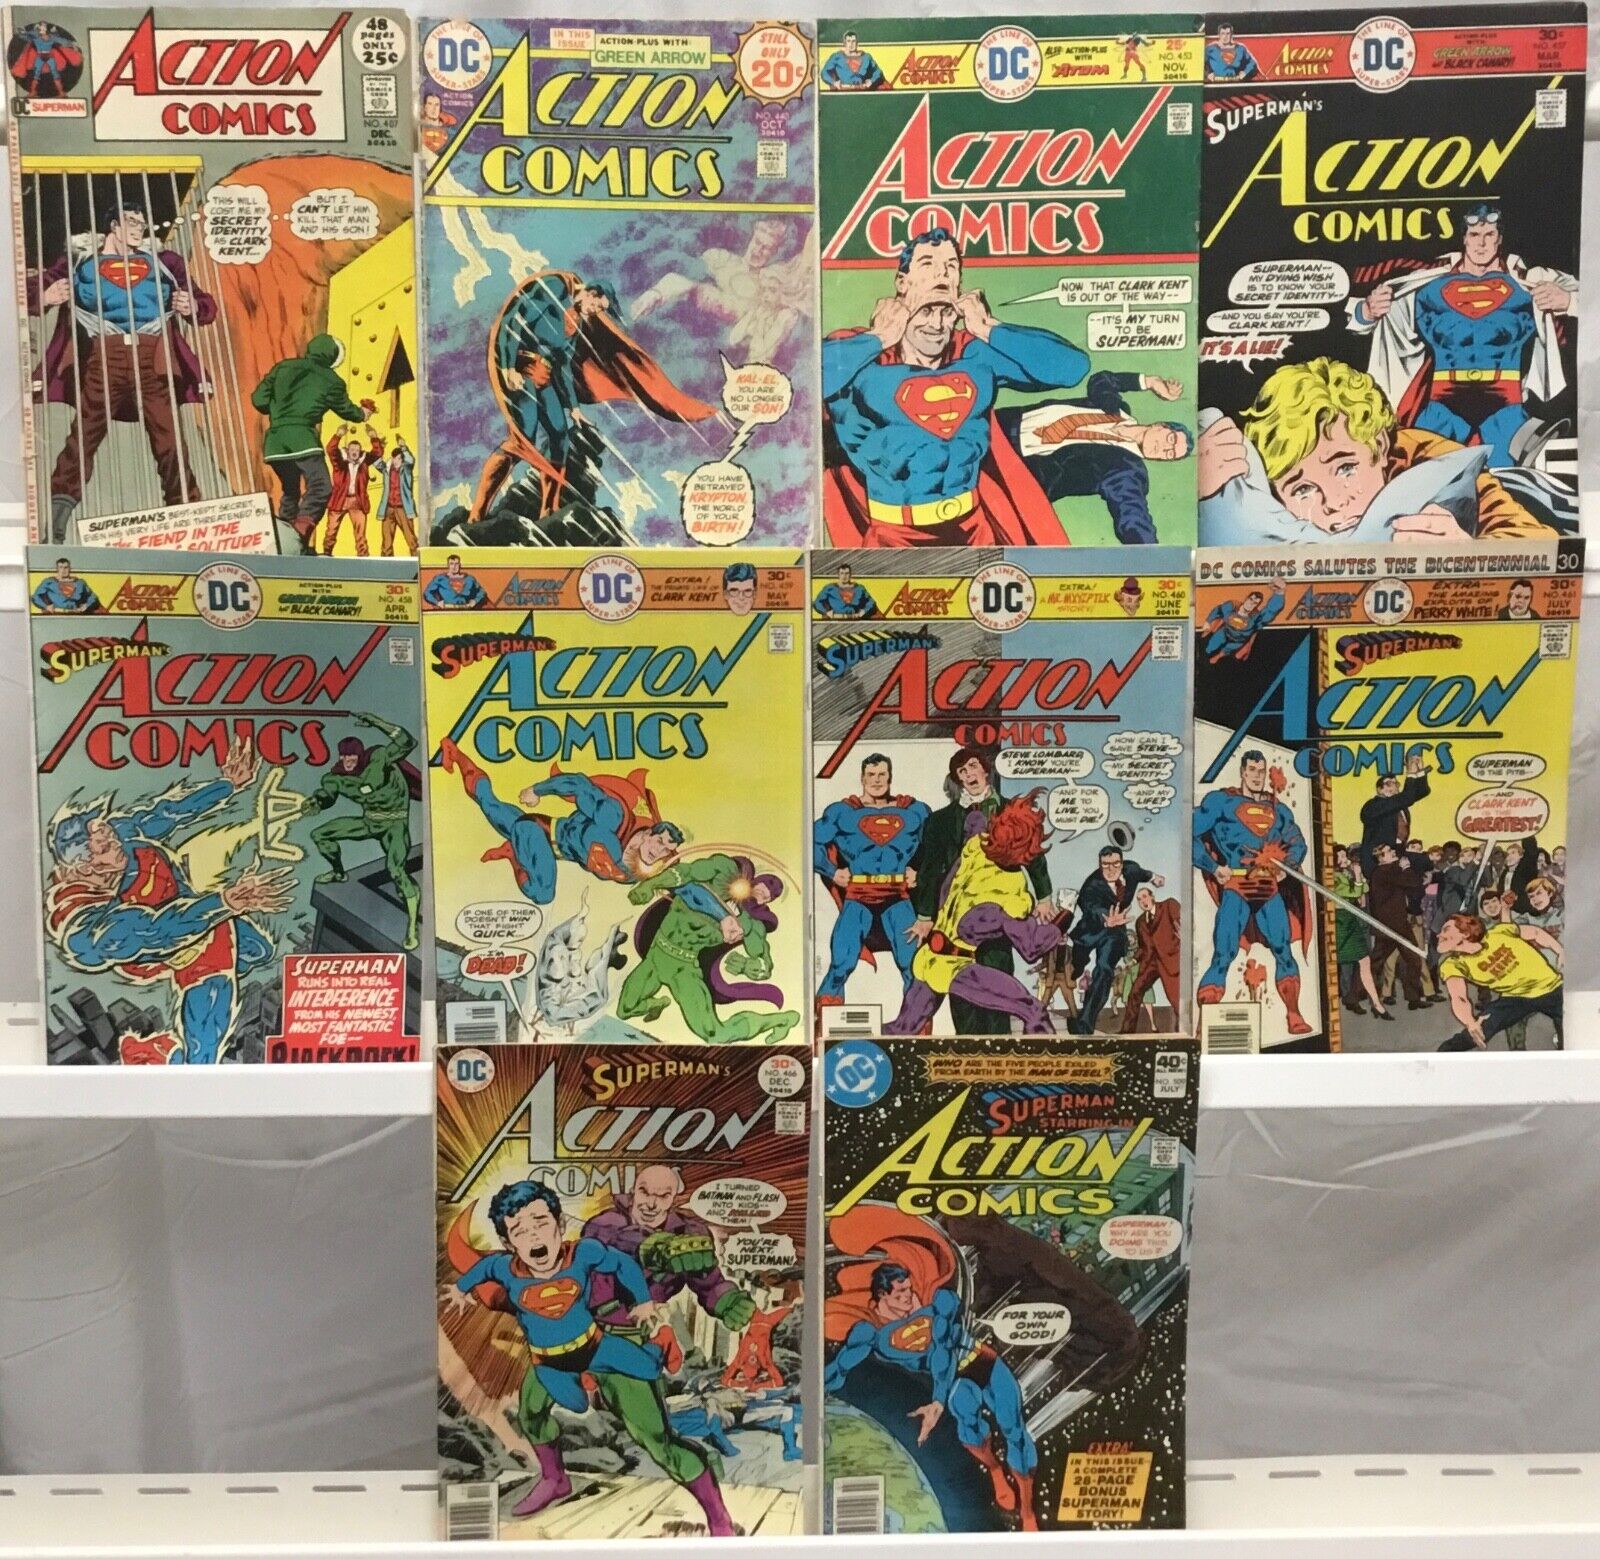 DC Comics - Low Grade Vintage Superman Action Comics - Comic Book Lot of 10